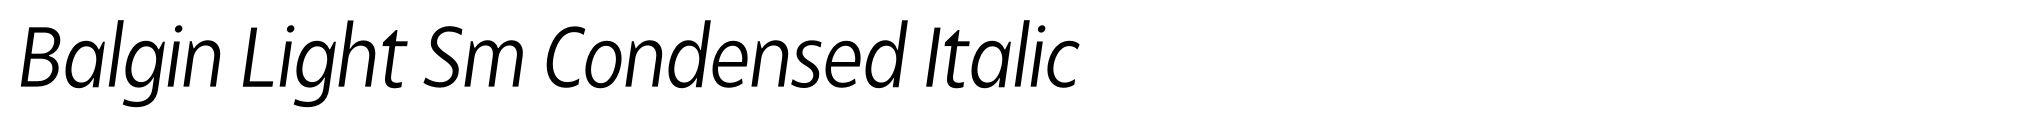 Balgin Light Sm Condensed Italic image